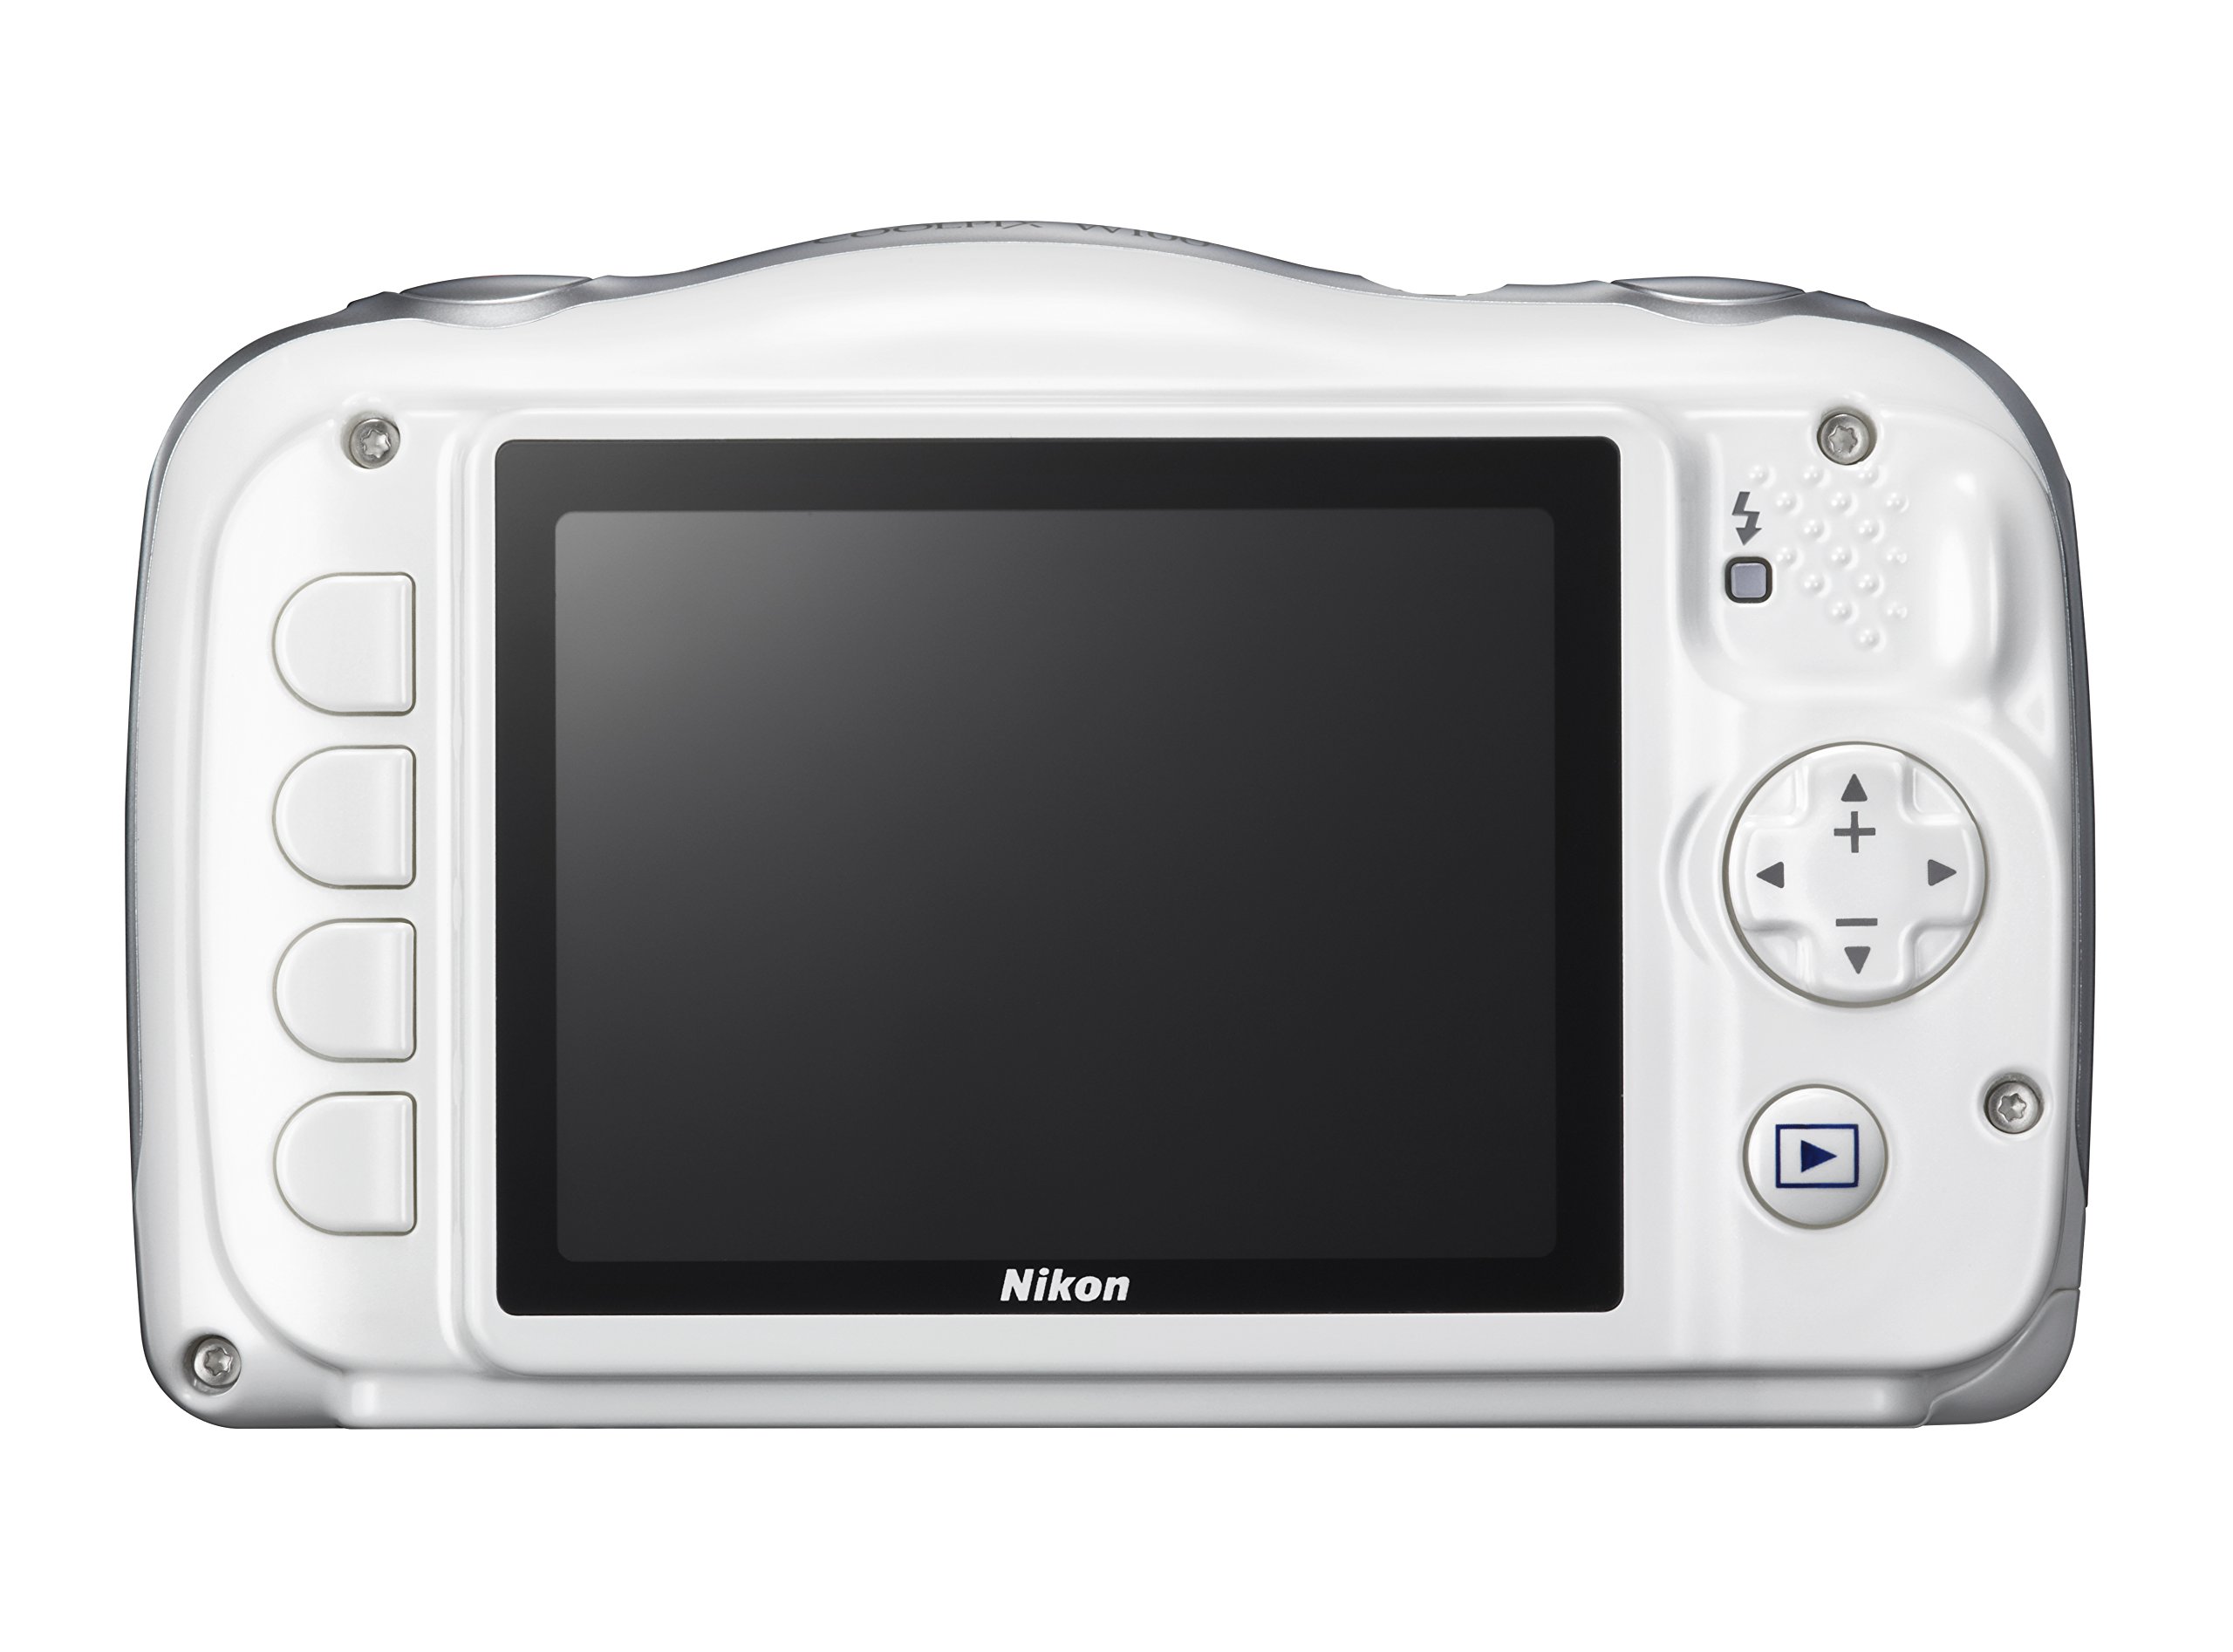 Nikon COOLPIX W100 (White)